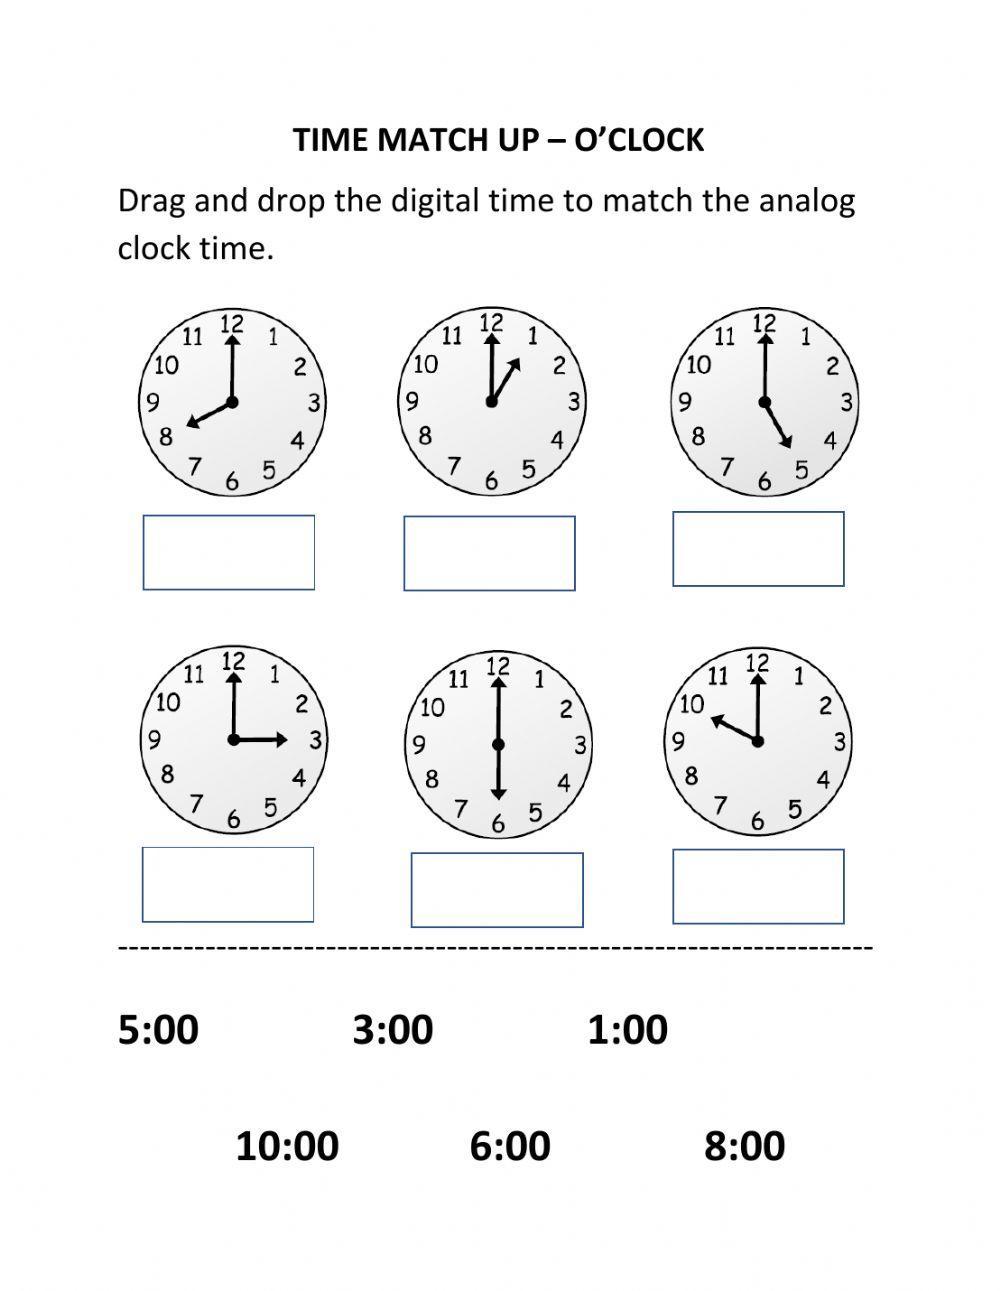 Time Match Up - O'clock